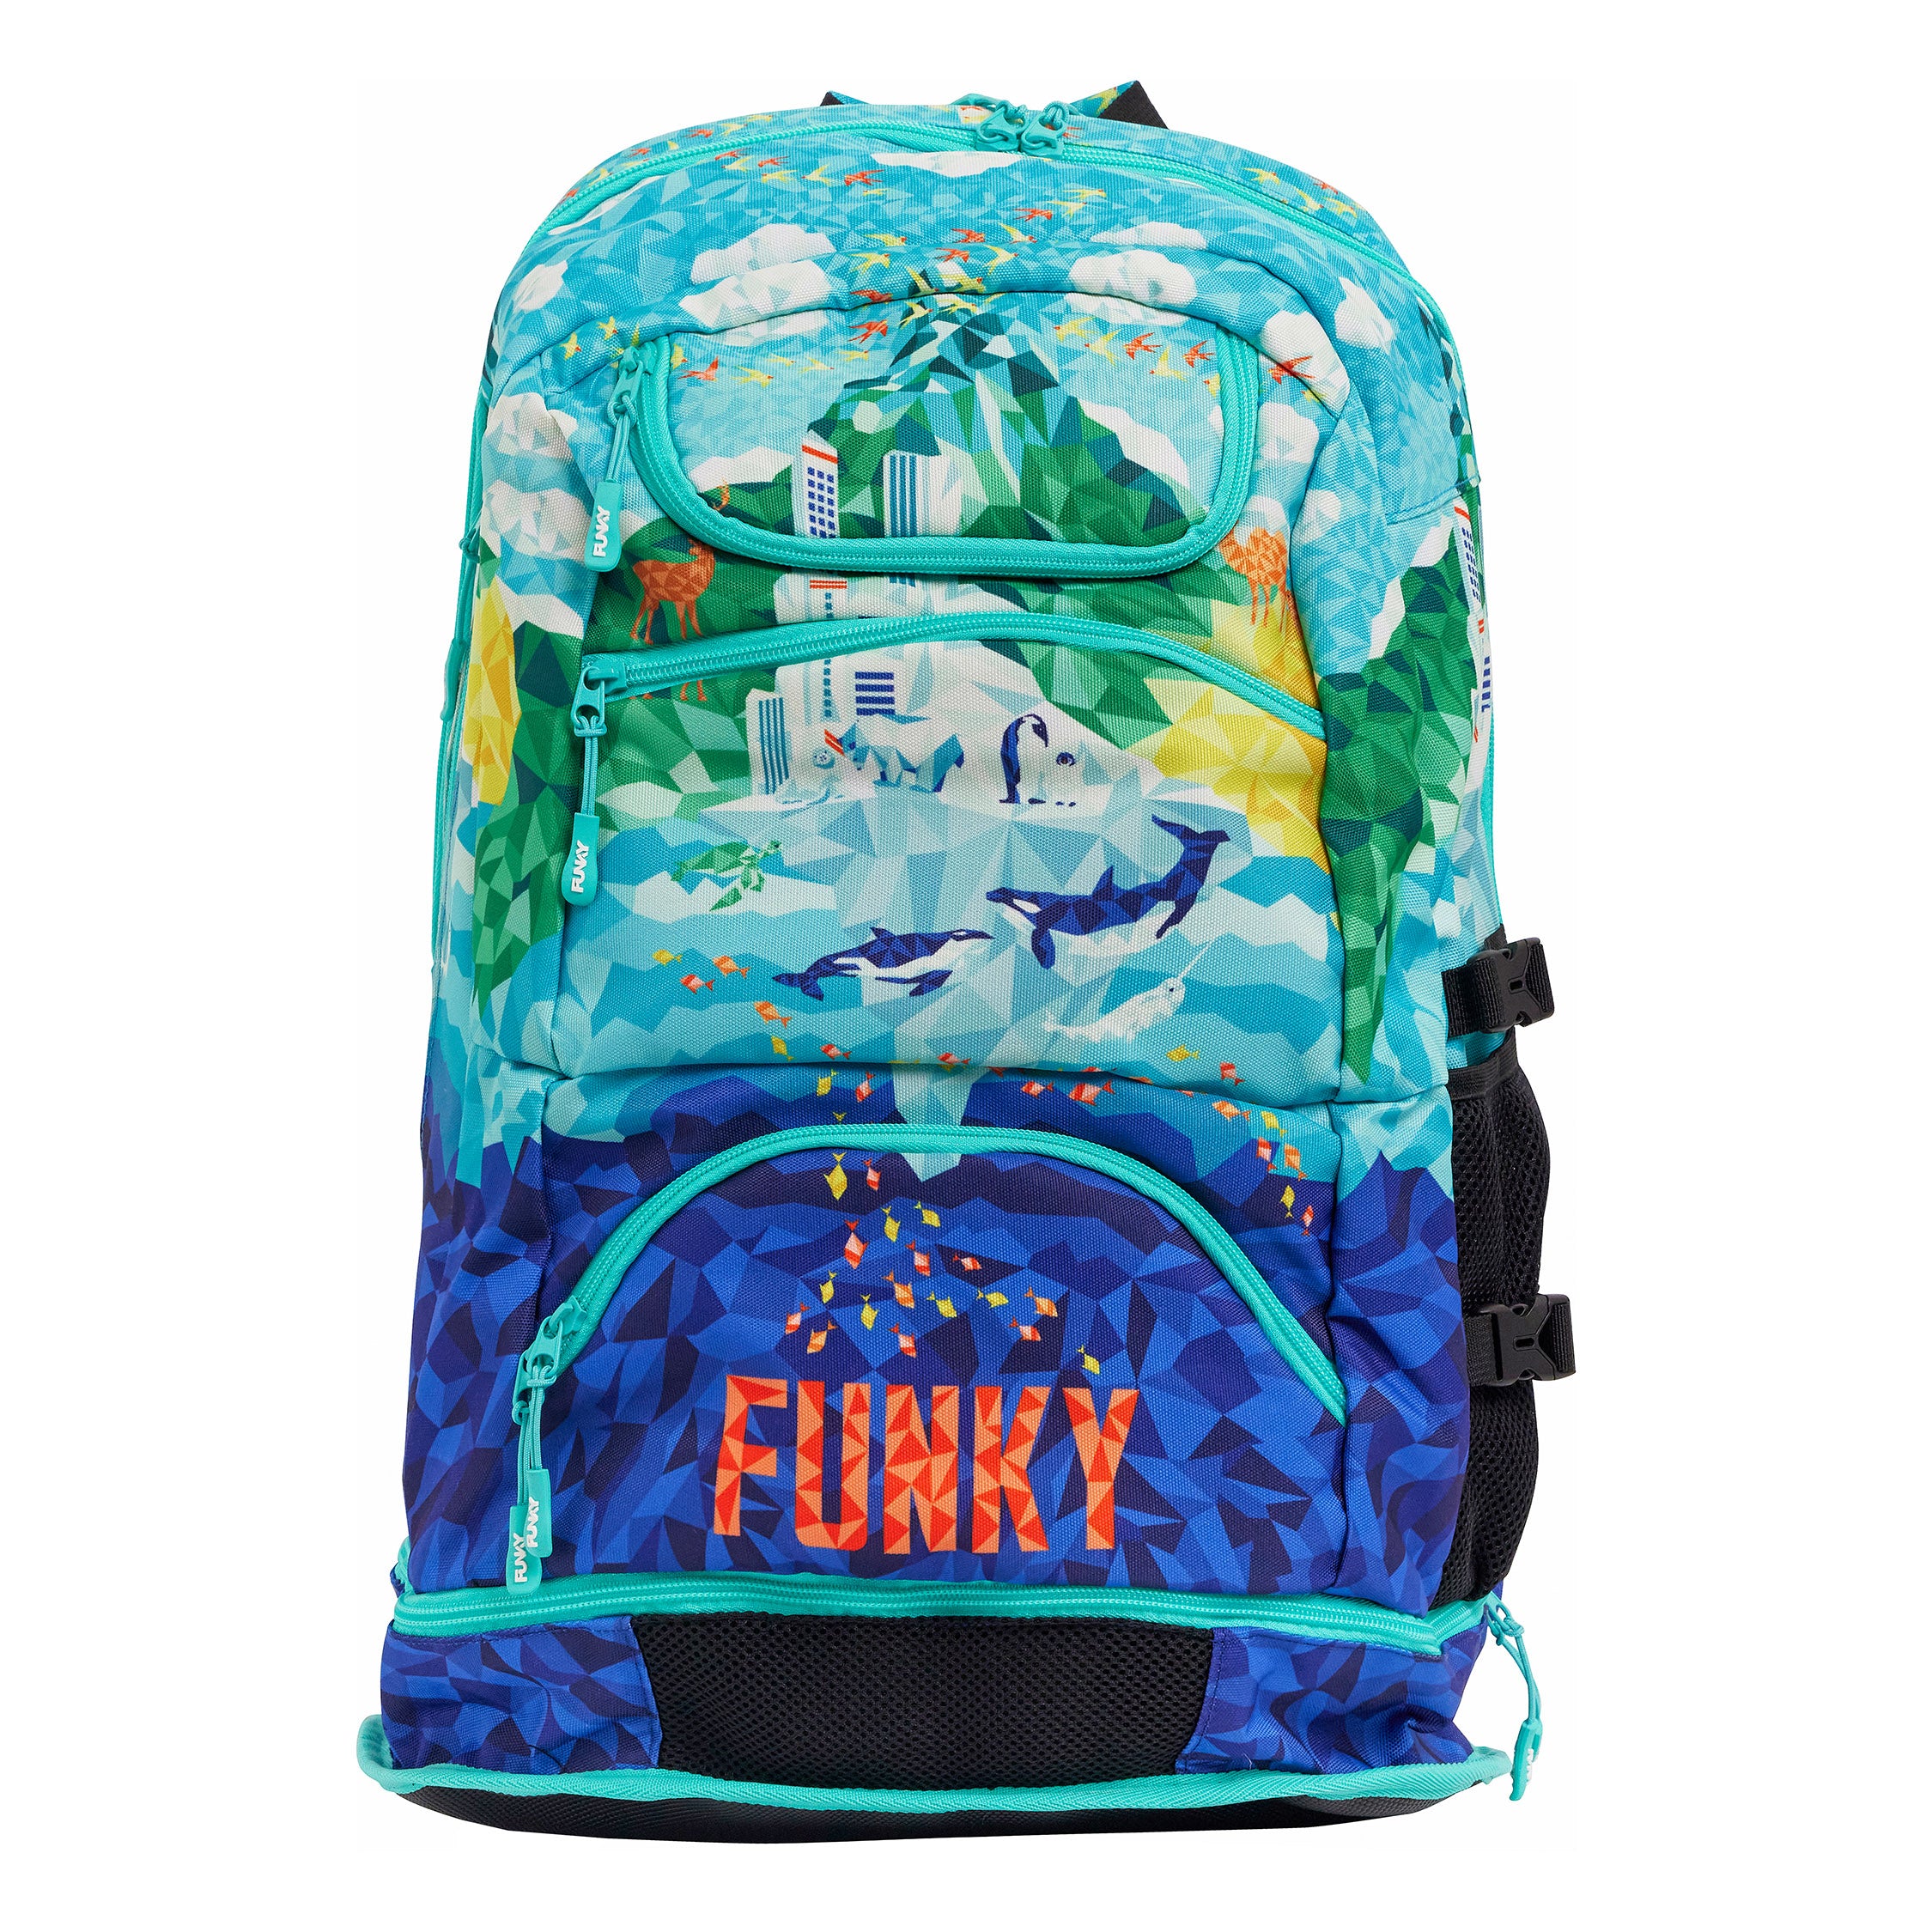 Funky - Wildermess - Elite Squad Backpack